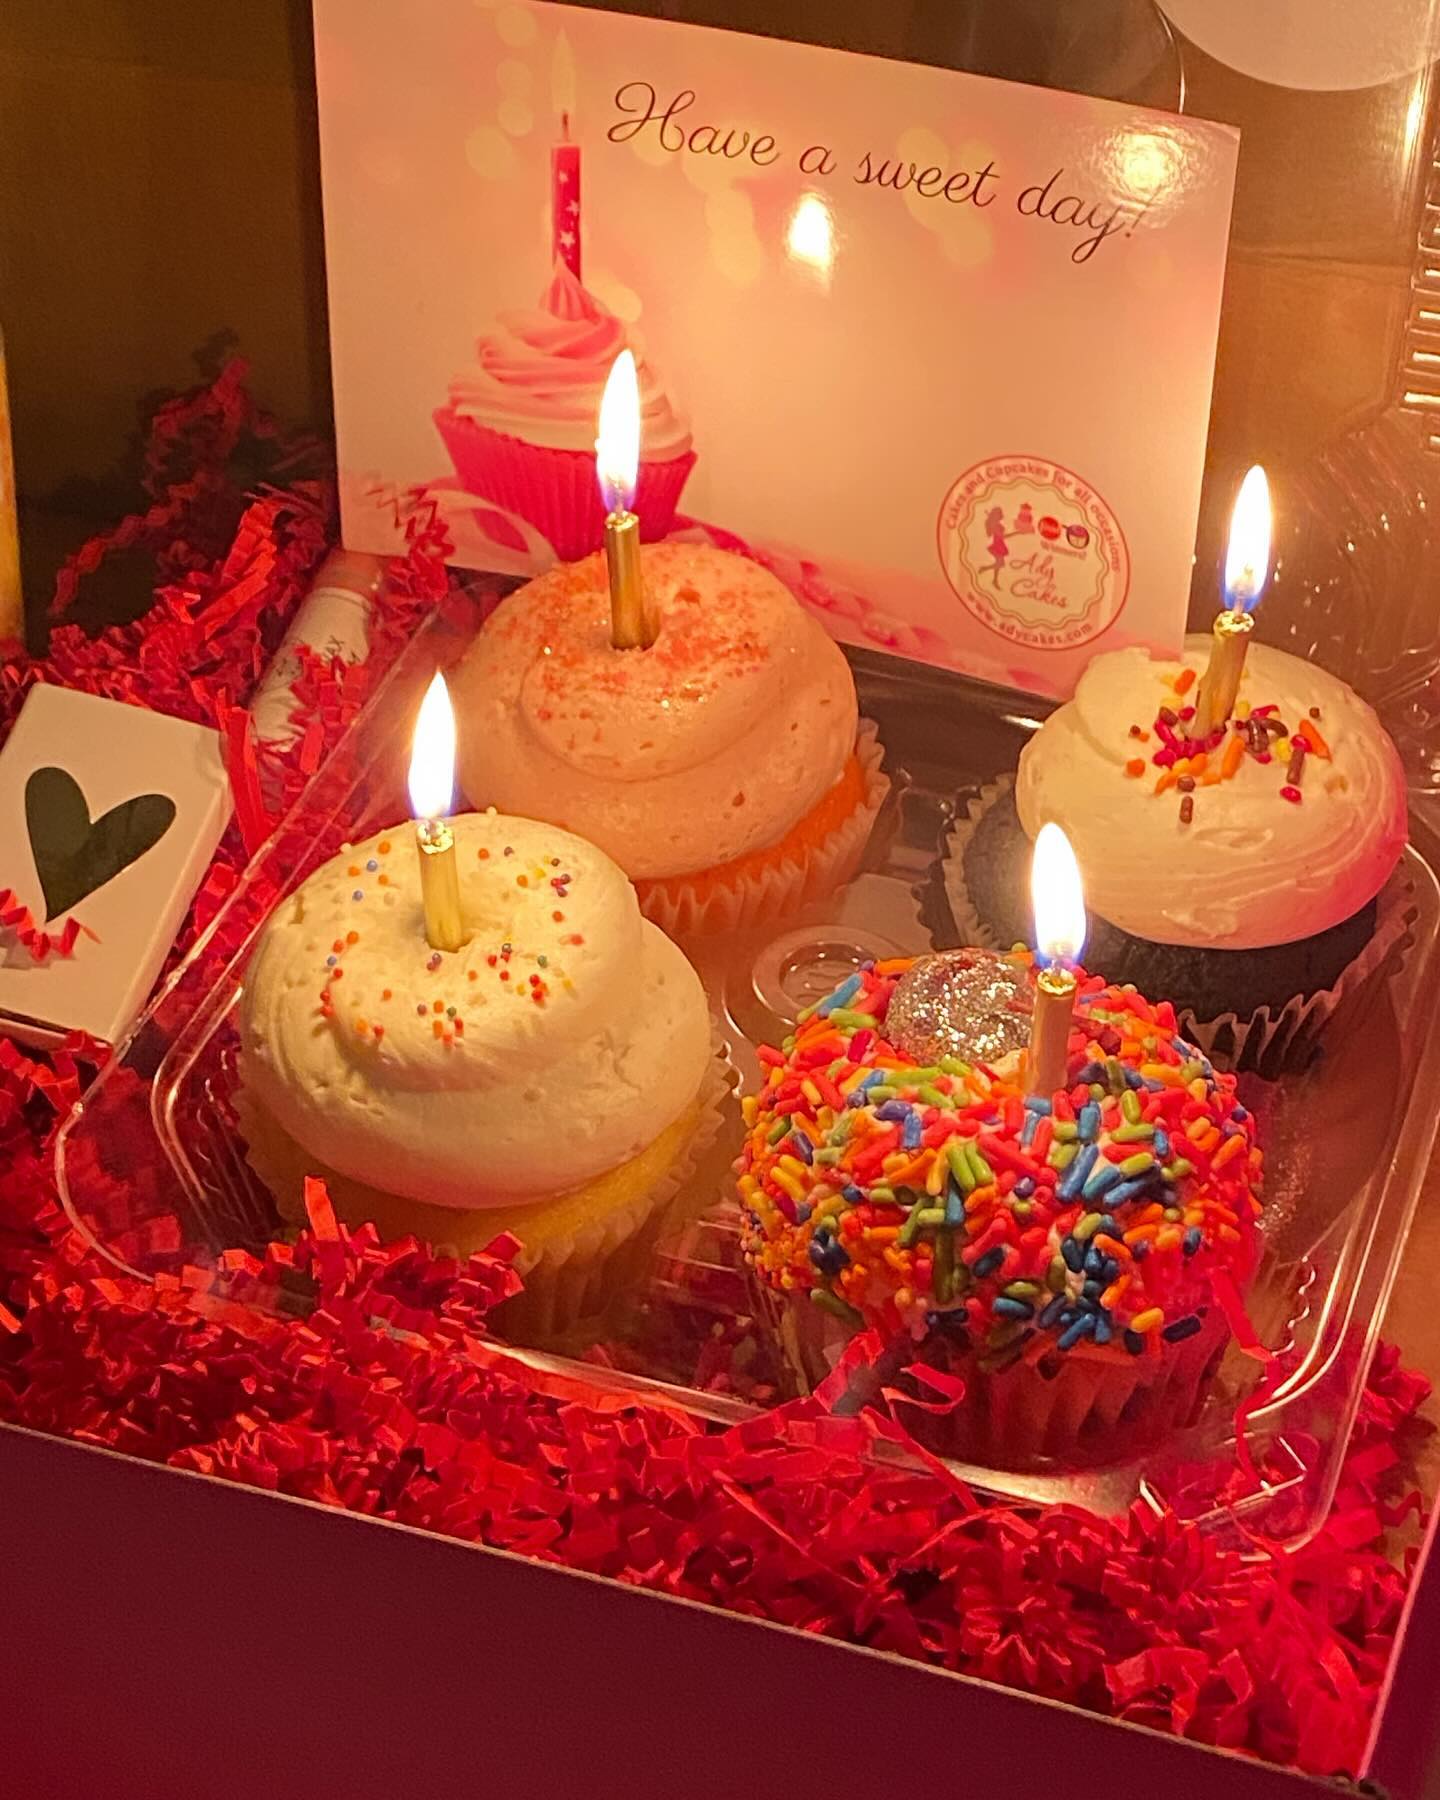 Happy 37 🎈 Bday To Me !! #bdaygirl #scorpion #happybirthday #grateful #loveislove #37 
-
-
Amazing bday cupcakes from @adycakes_pa  #cupcakes #readingpa #suportlocal #bdaycupcakes 

-
-